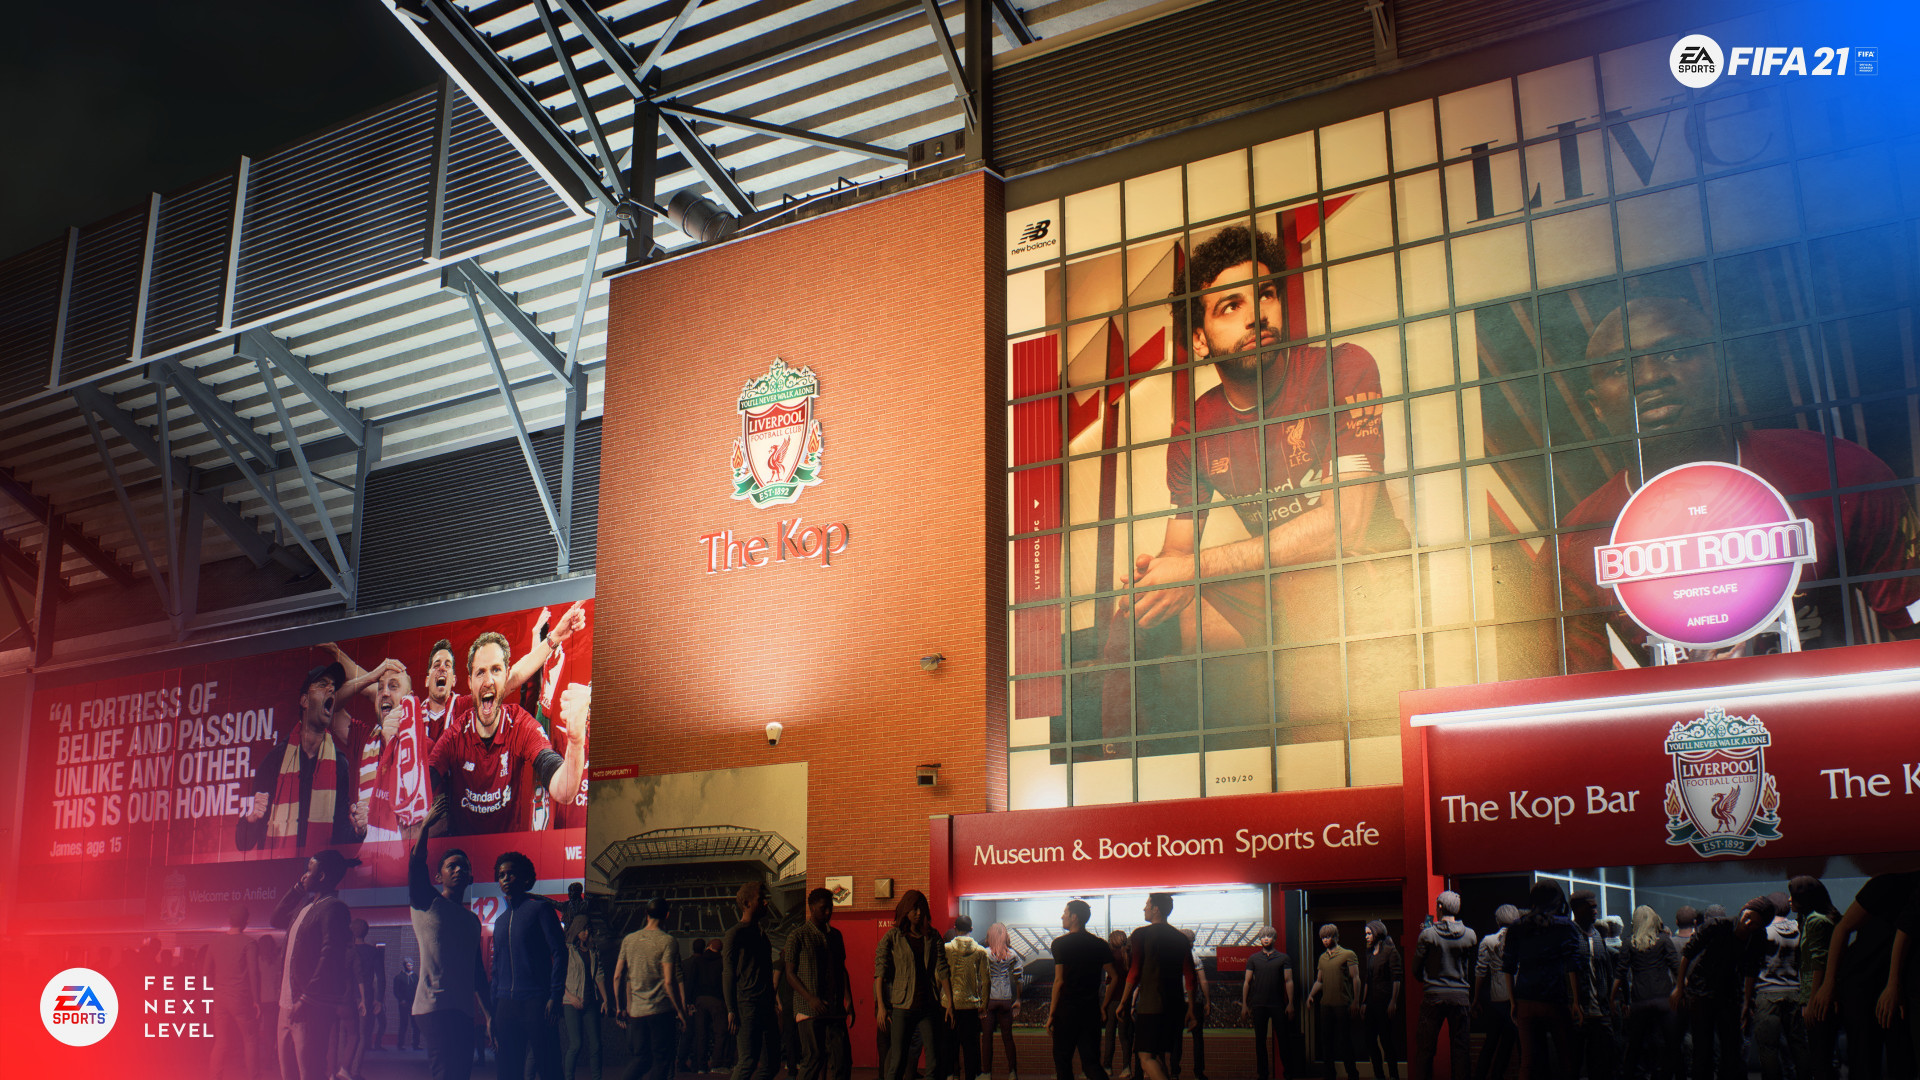 Download wallpaper: FIFA 21 Liverpool Stadium 1920x1080